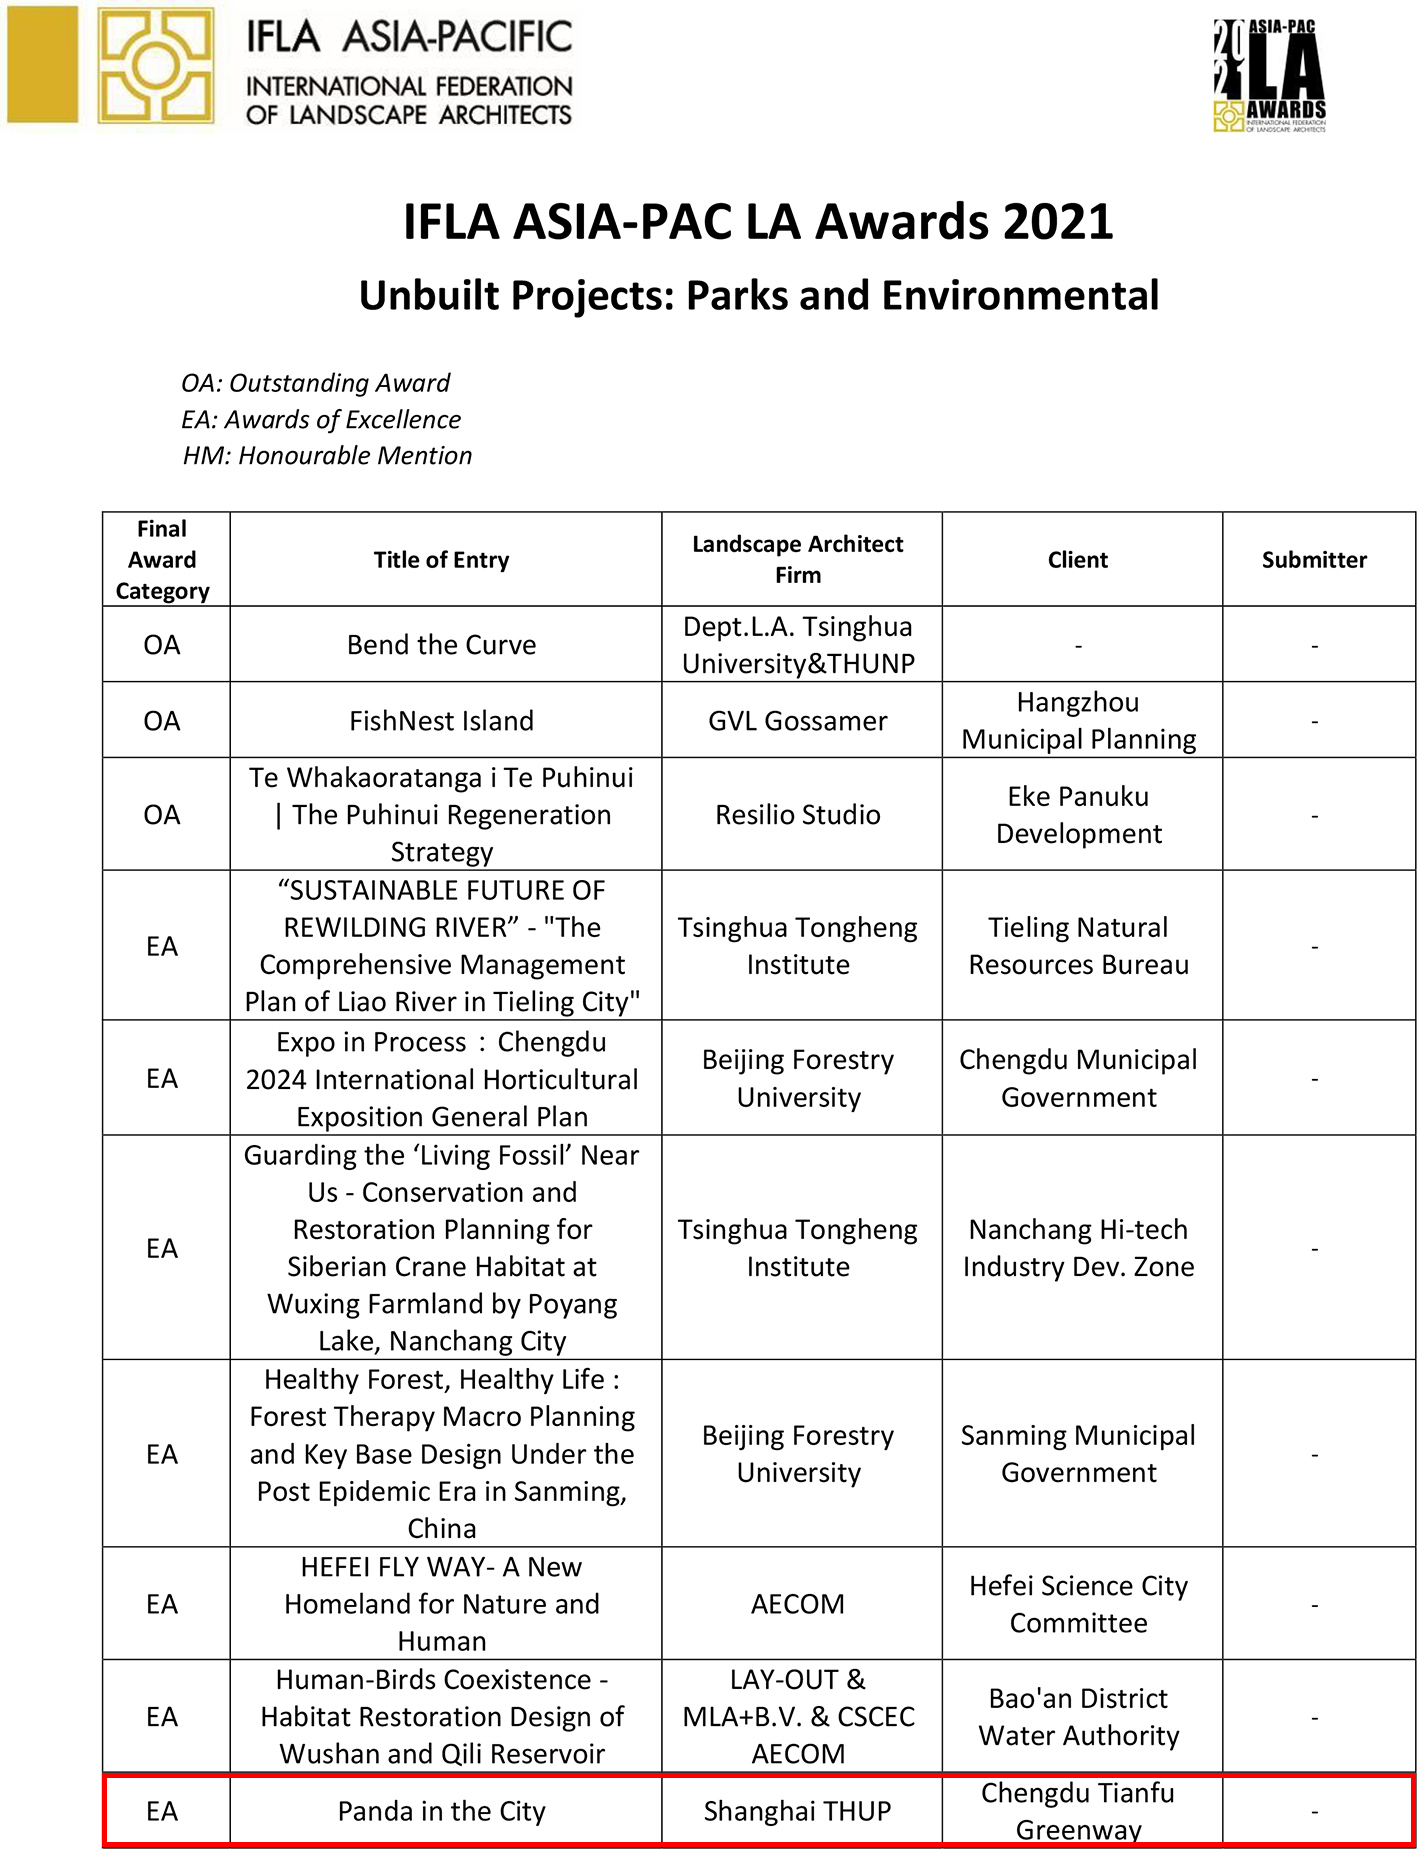 3_UBP-Parks and Environmental-1.jpg